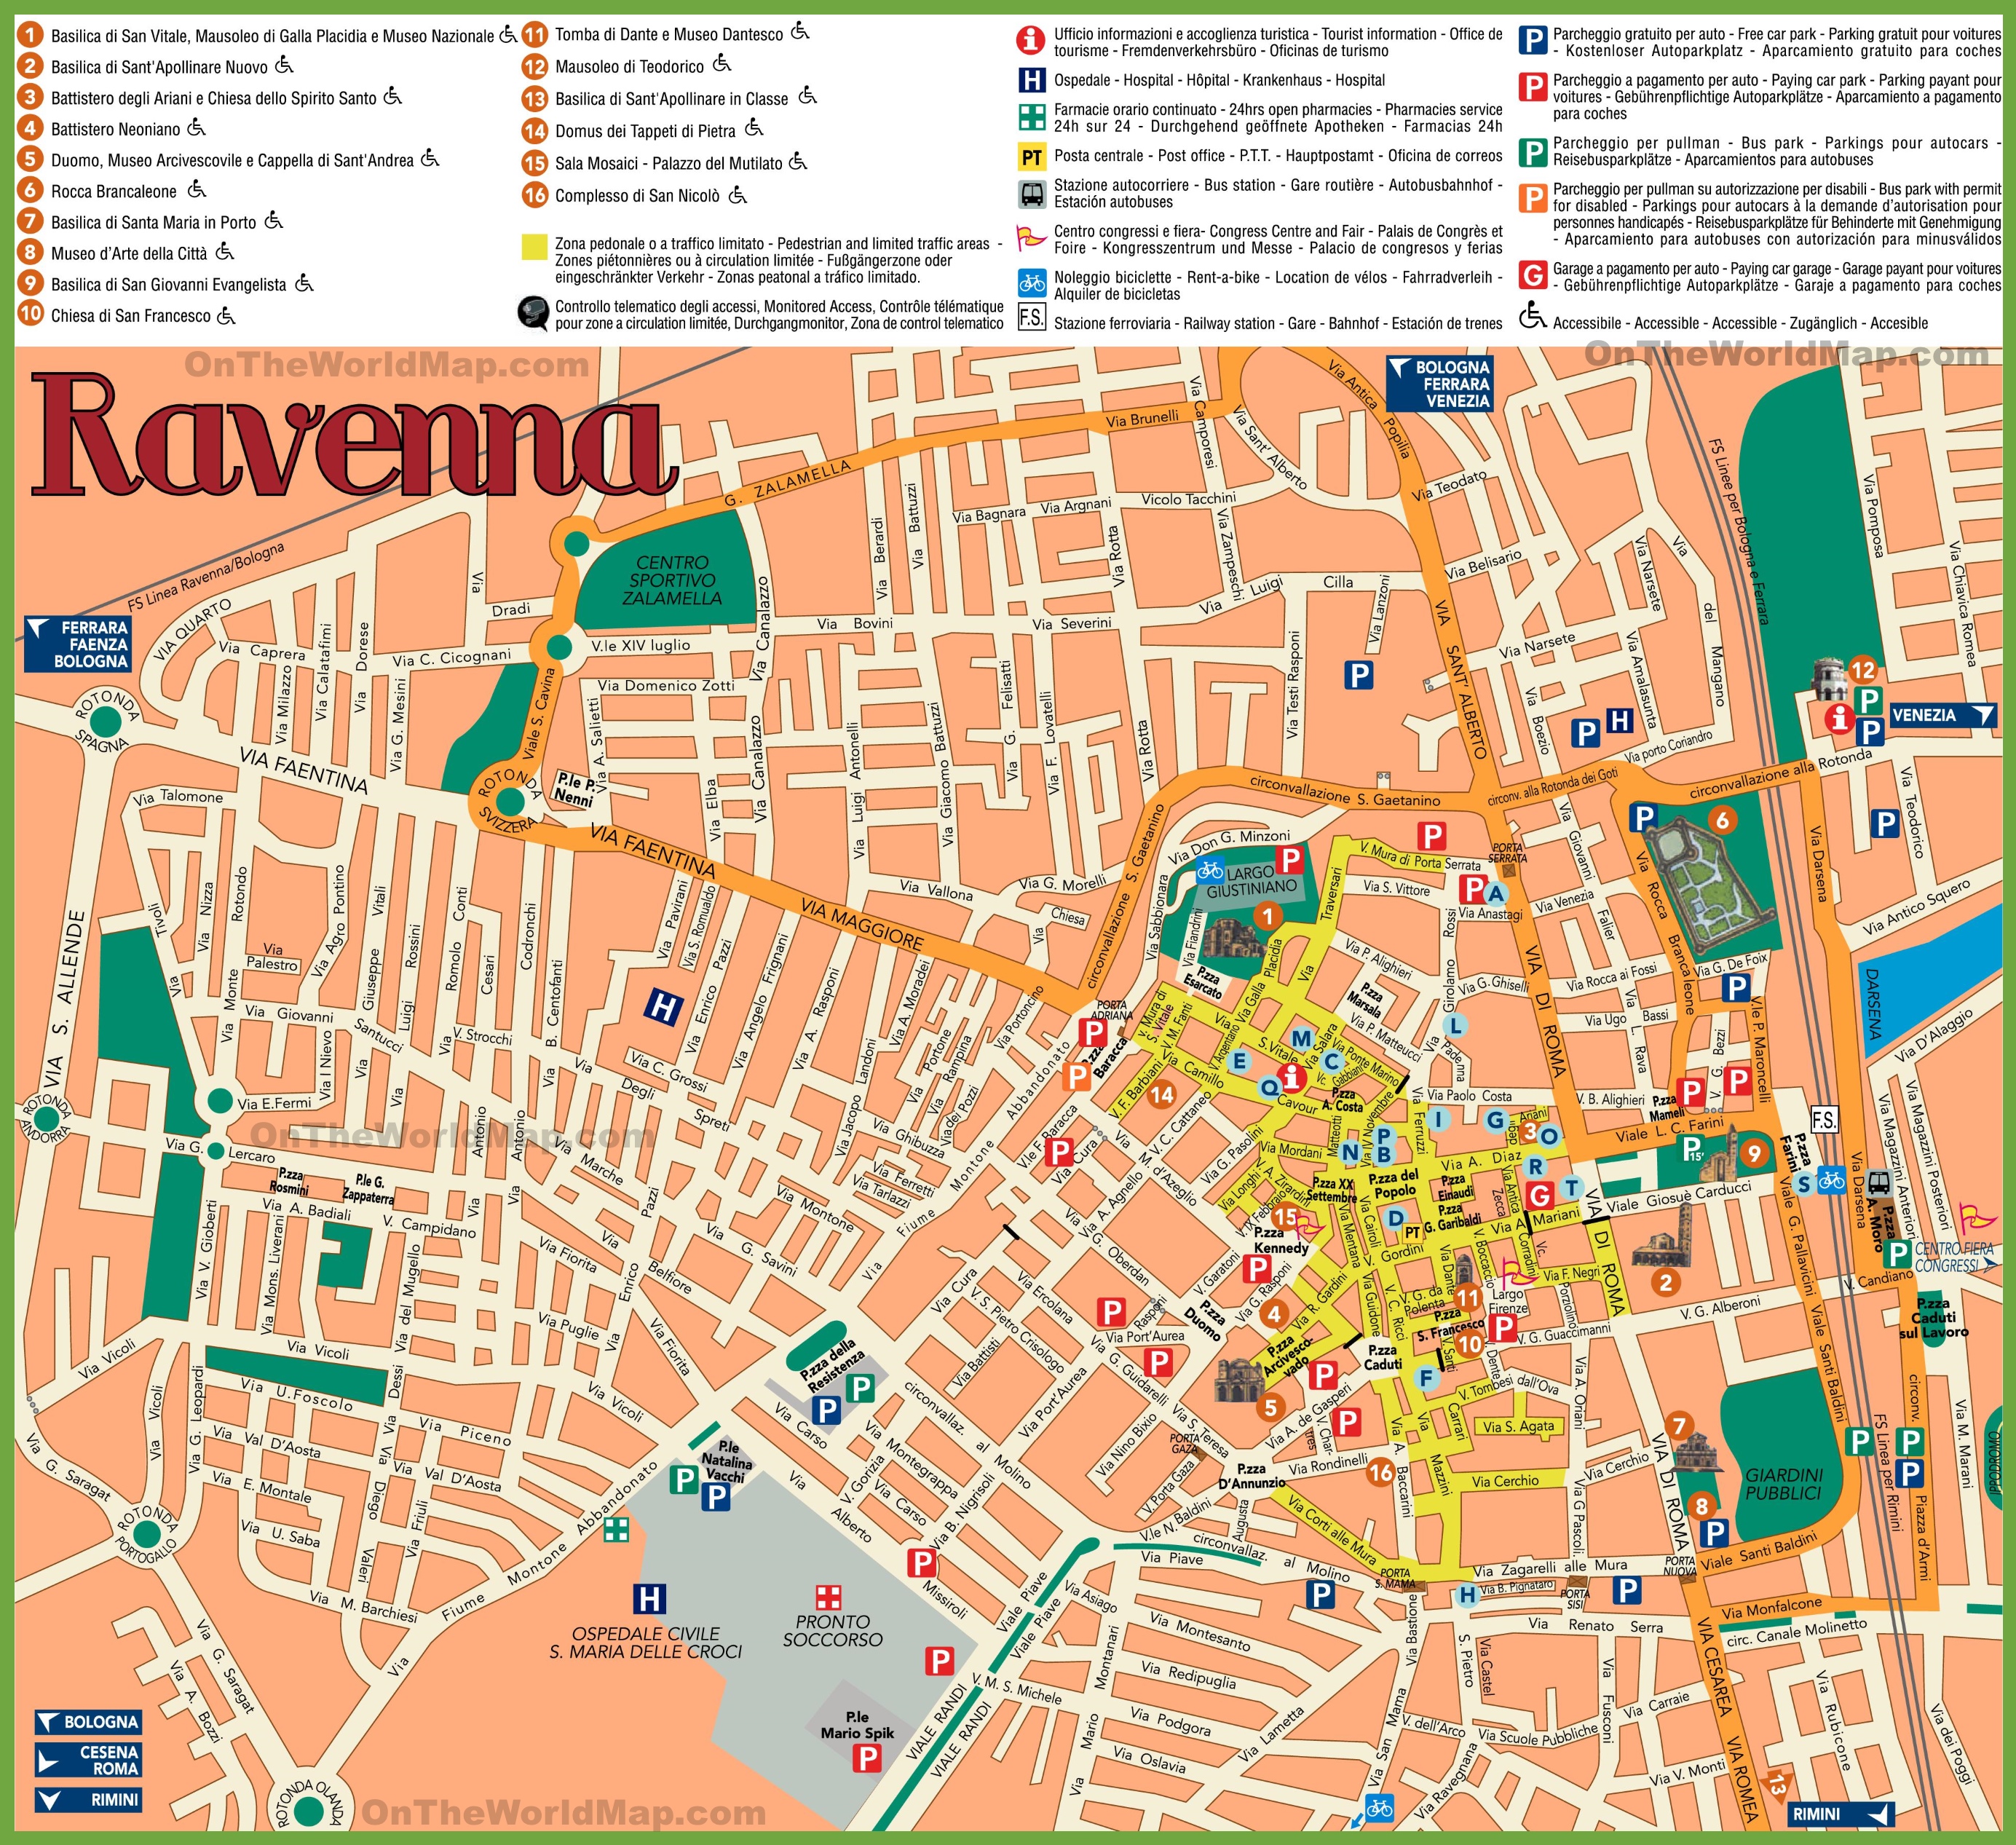 ravenna-sightseeing-map.jpg